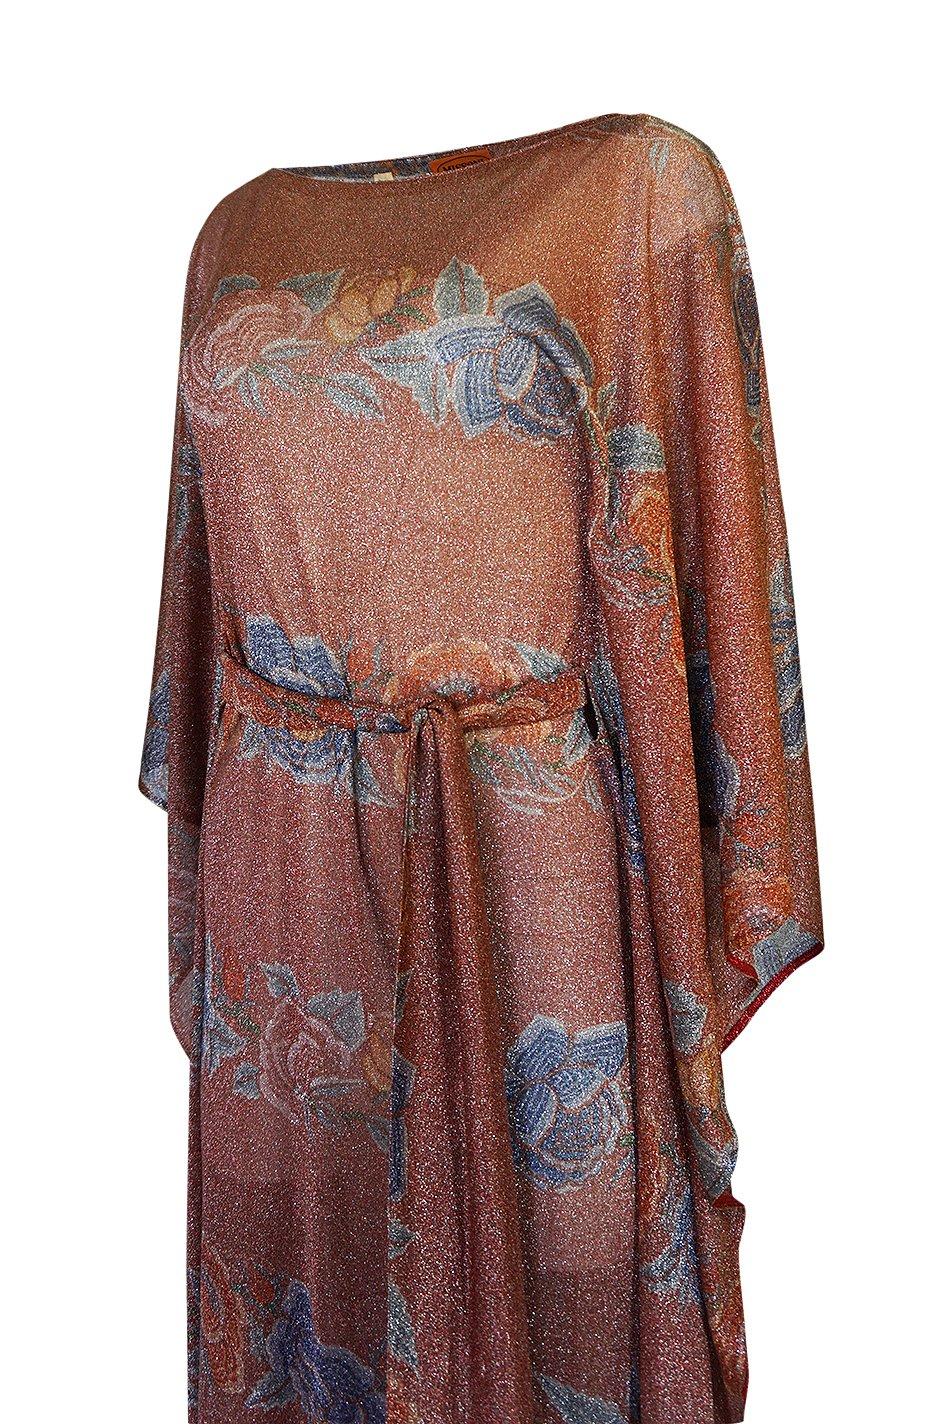 Missoni Floral Print Metallic Lurex Caftan Dress, circa 1972-73  3